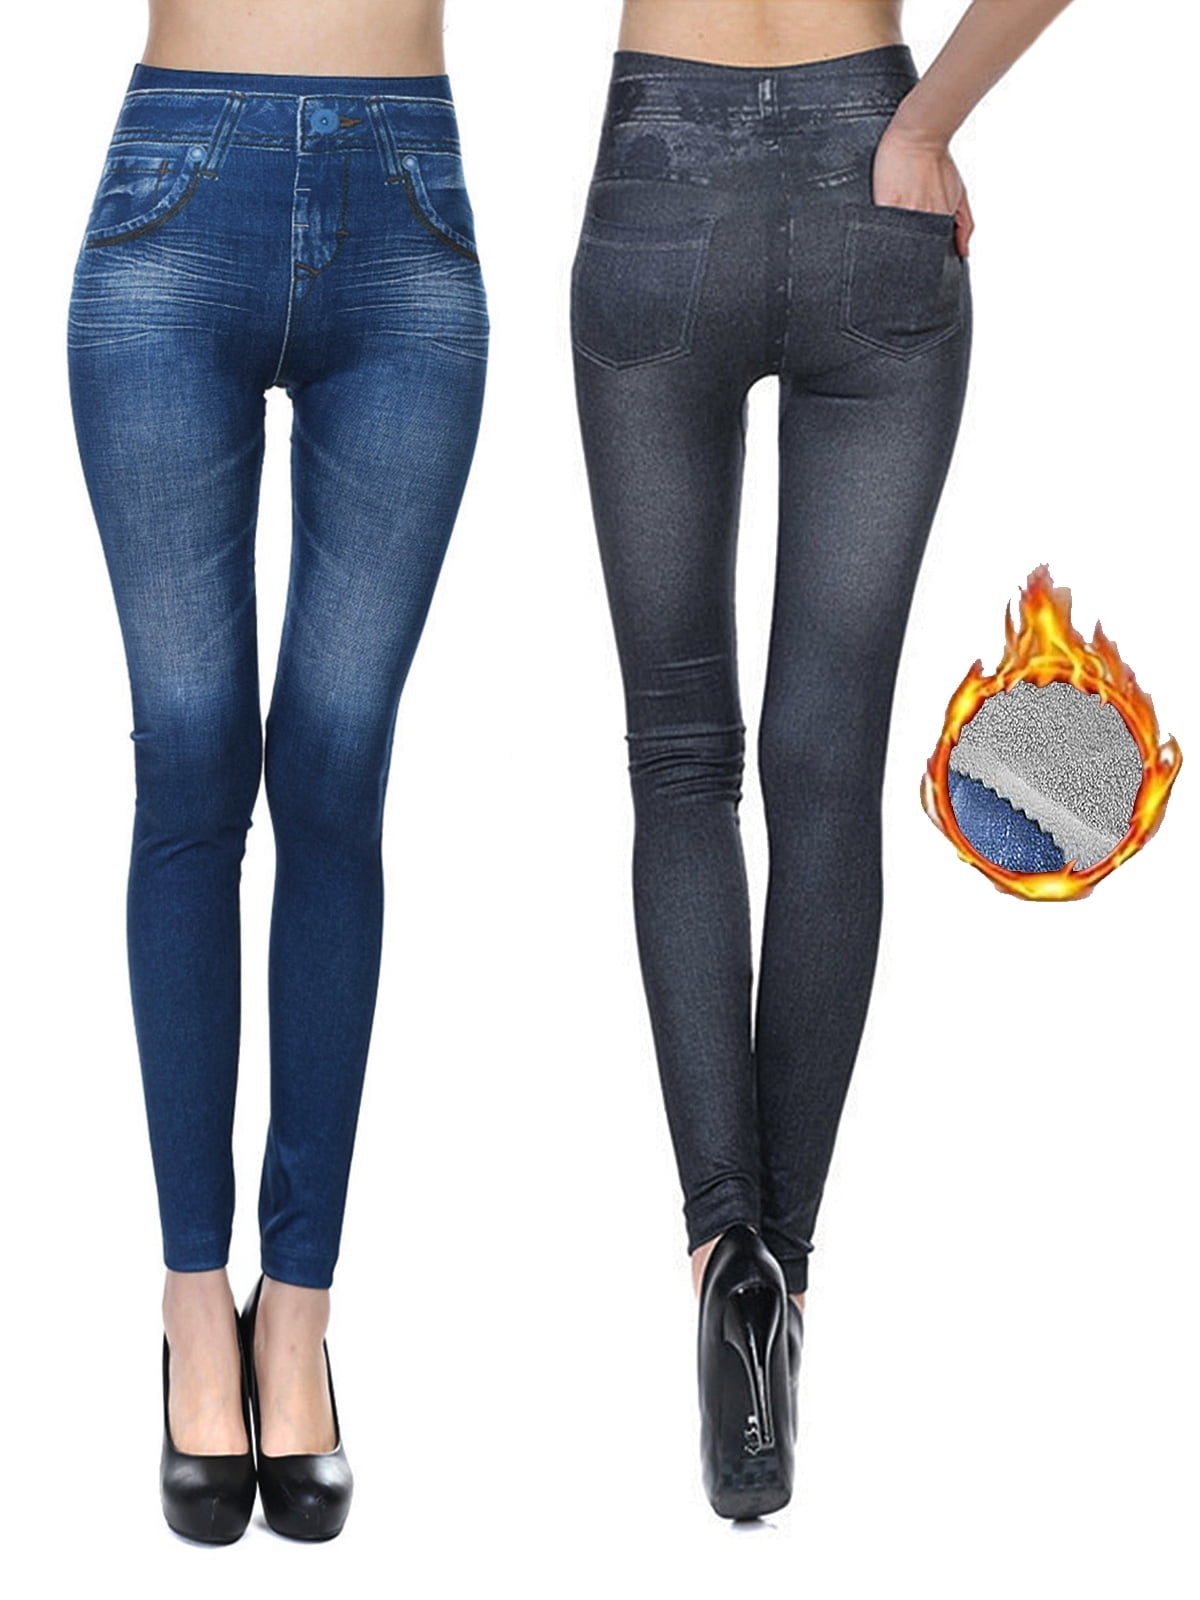 QISIWOLE Flare Jeans for Women Ladies Elastic Pull-On Skinny Flared Leg  Pants Bootcut Denim Jeggings 